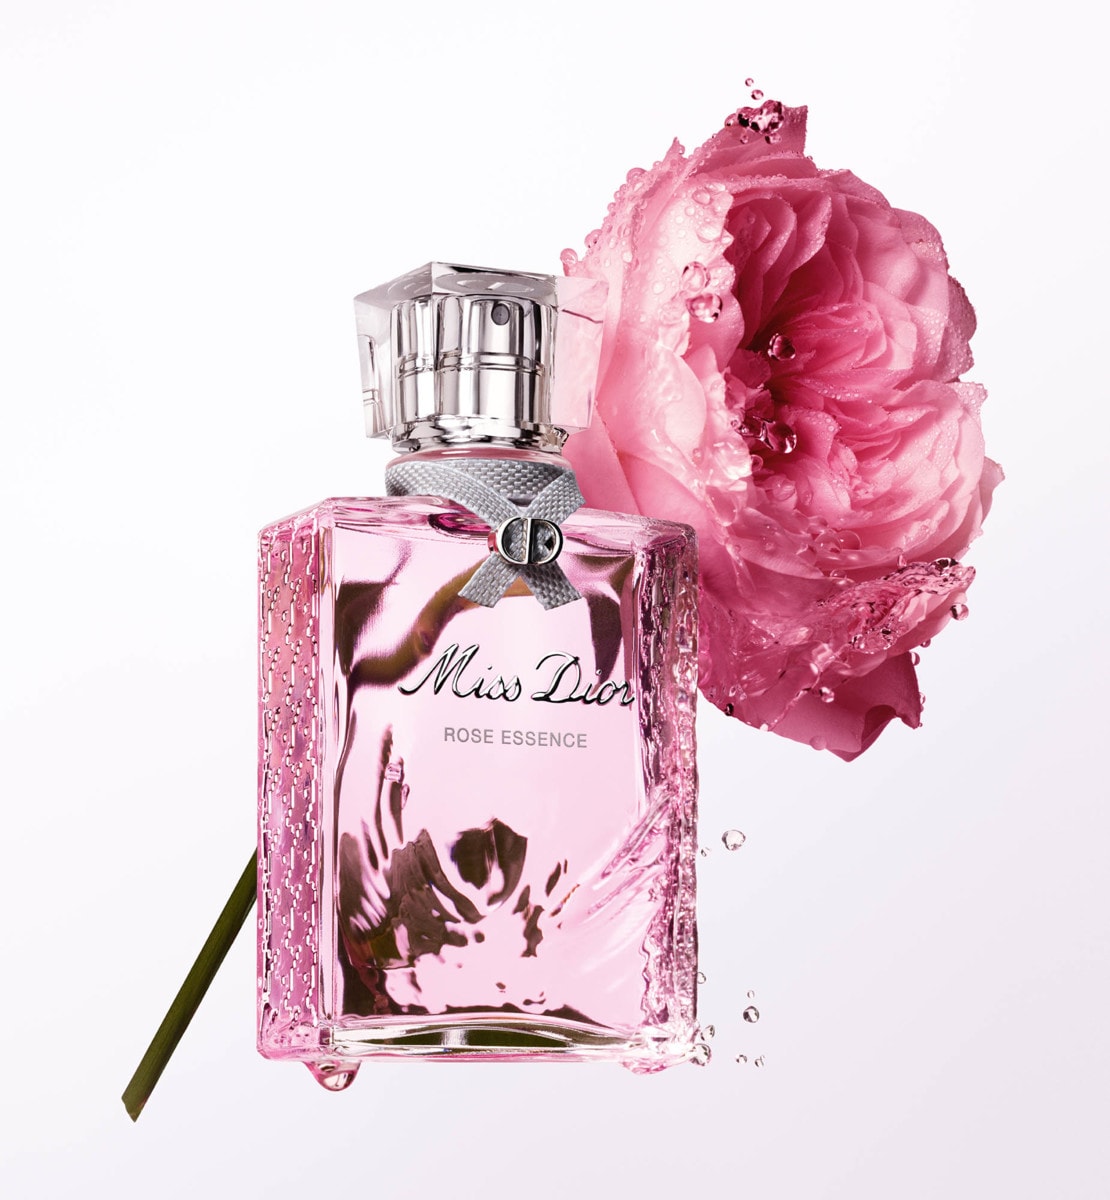 Miss Dior Rose NRoses Chiết  Nước hoa chiết